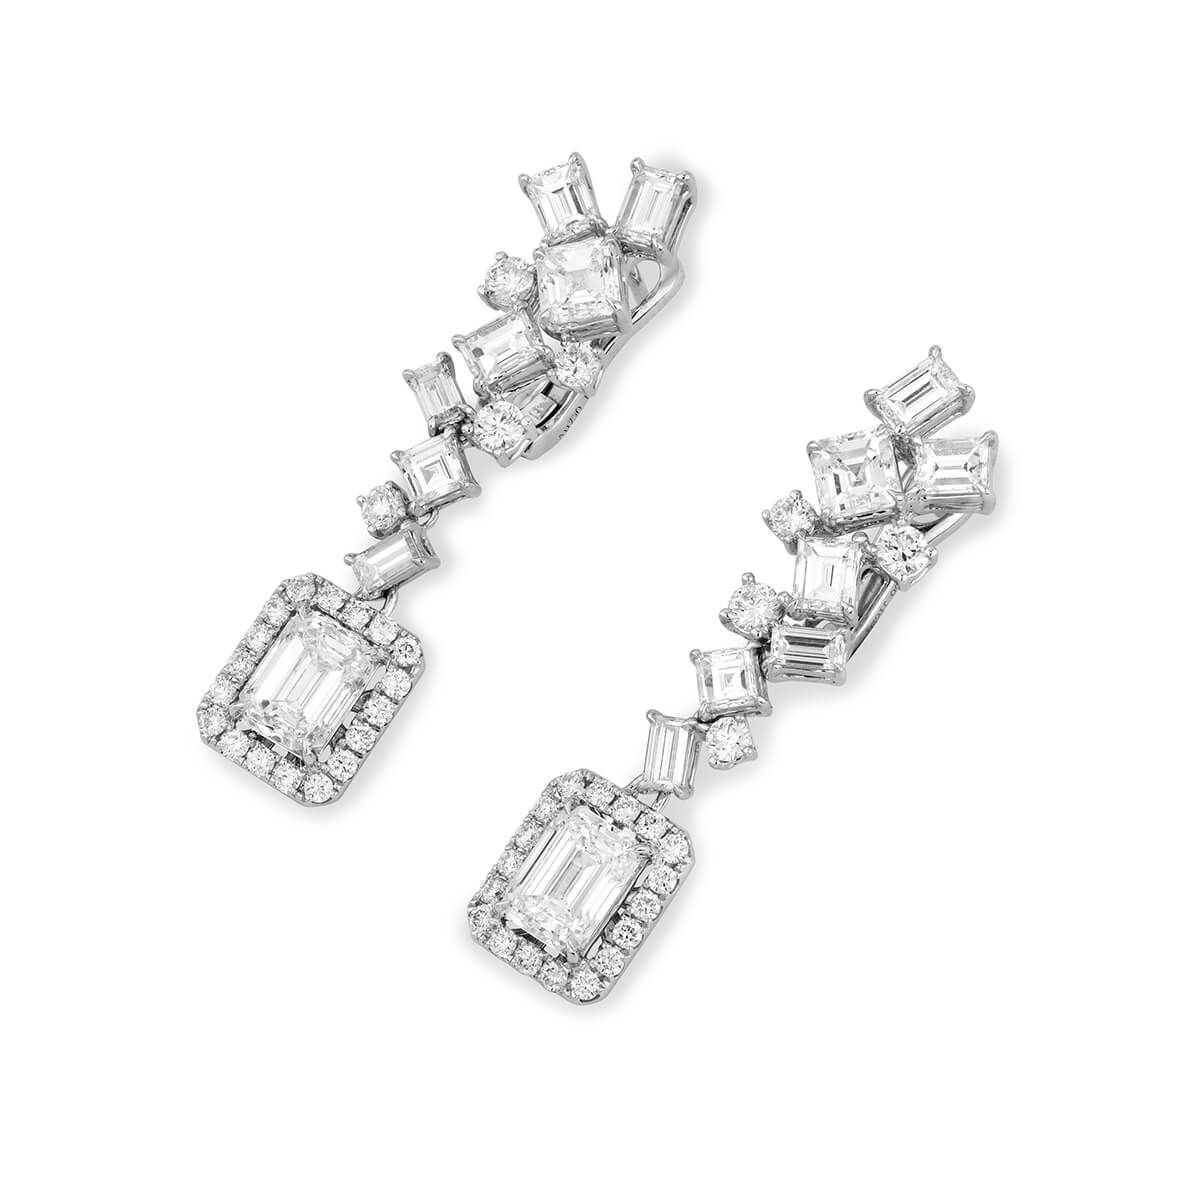  White Diamond Earrings, 5.14 Ct. TW, Emerald shape, GIA Certified, JCEW05393486